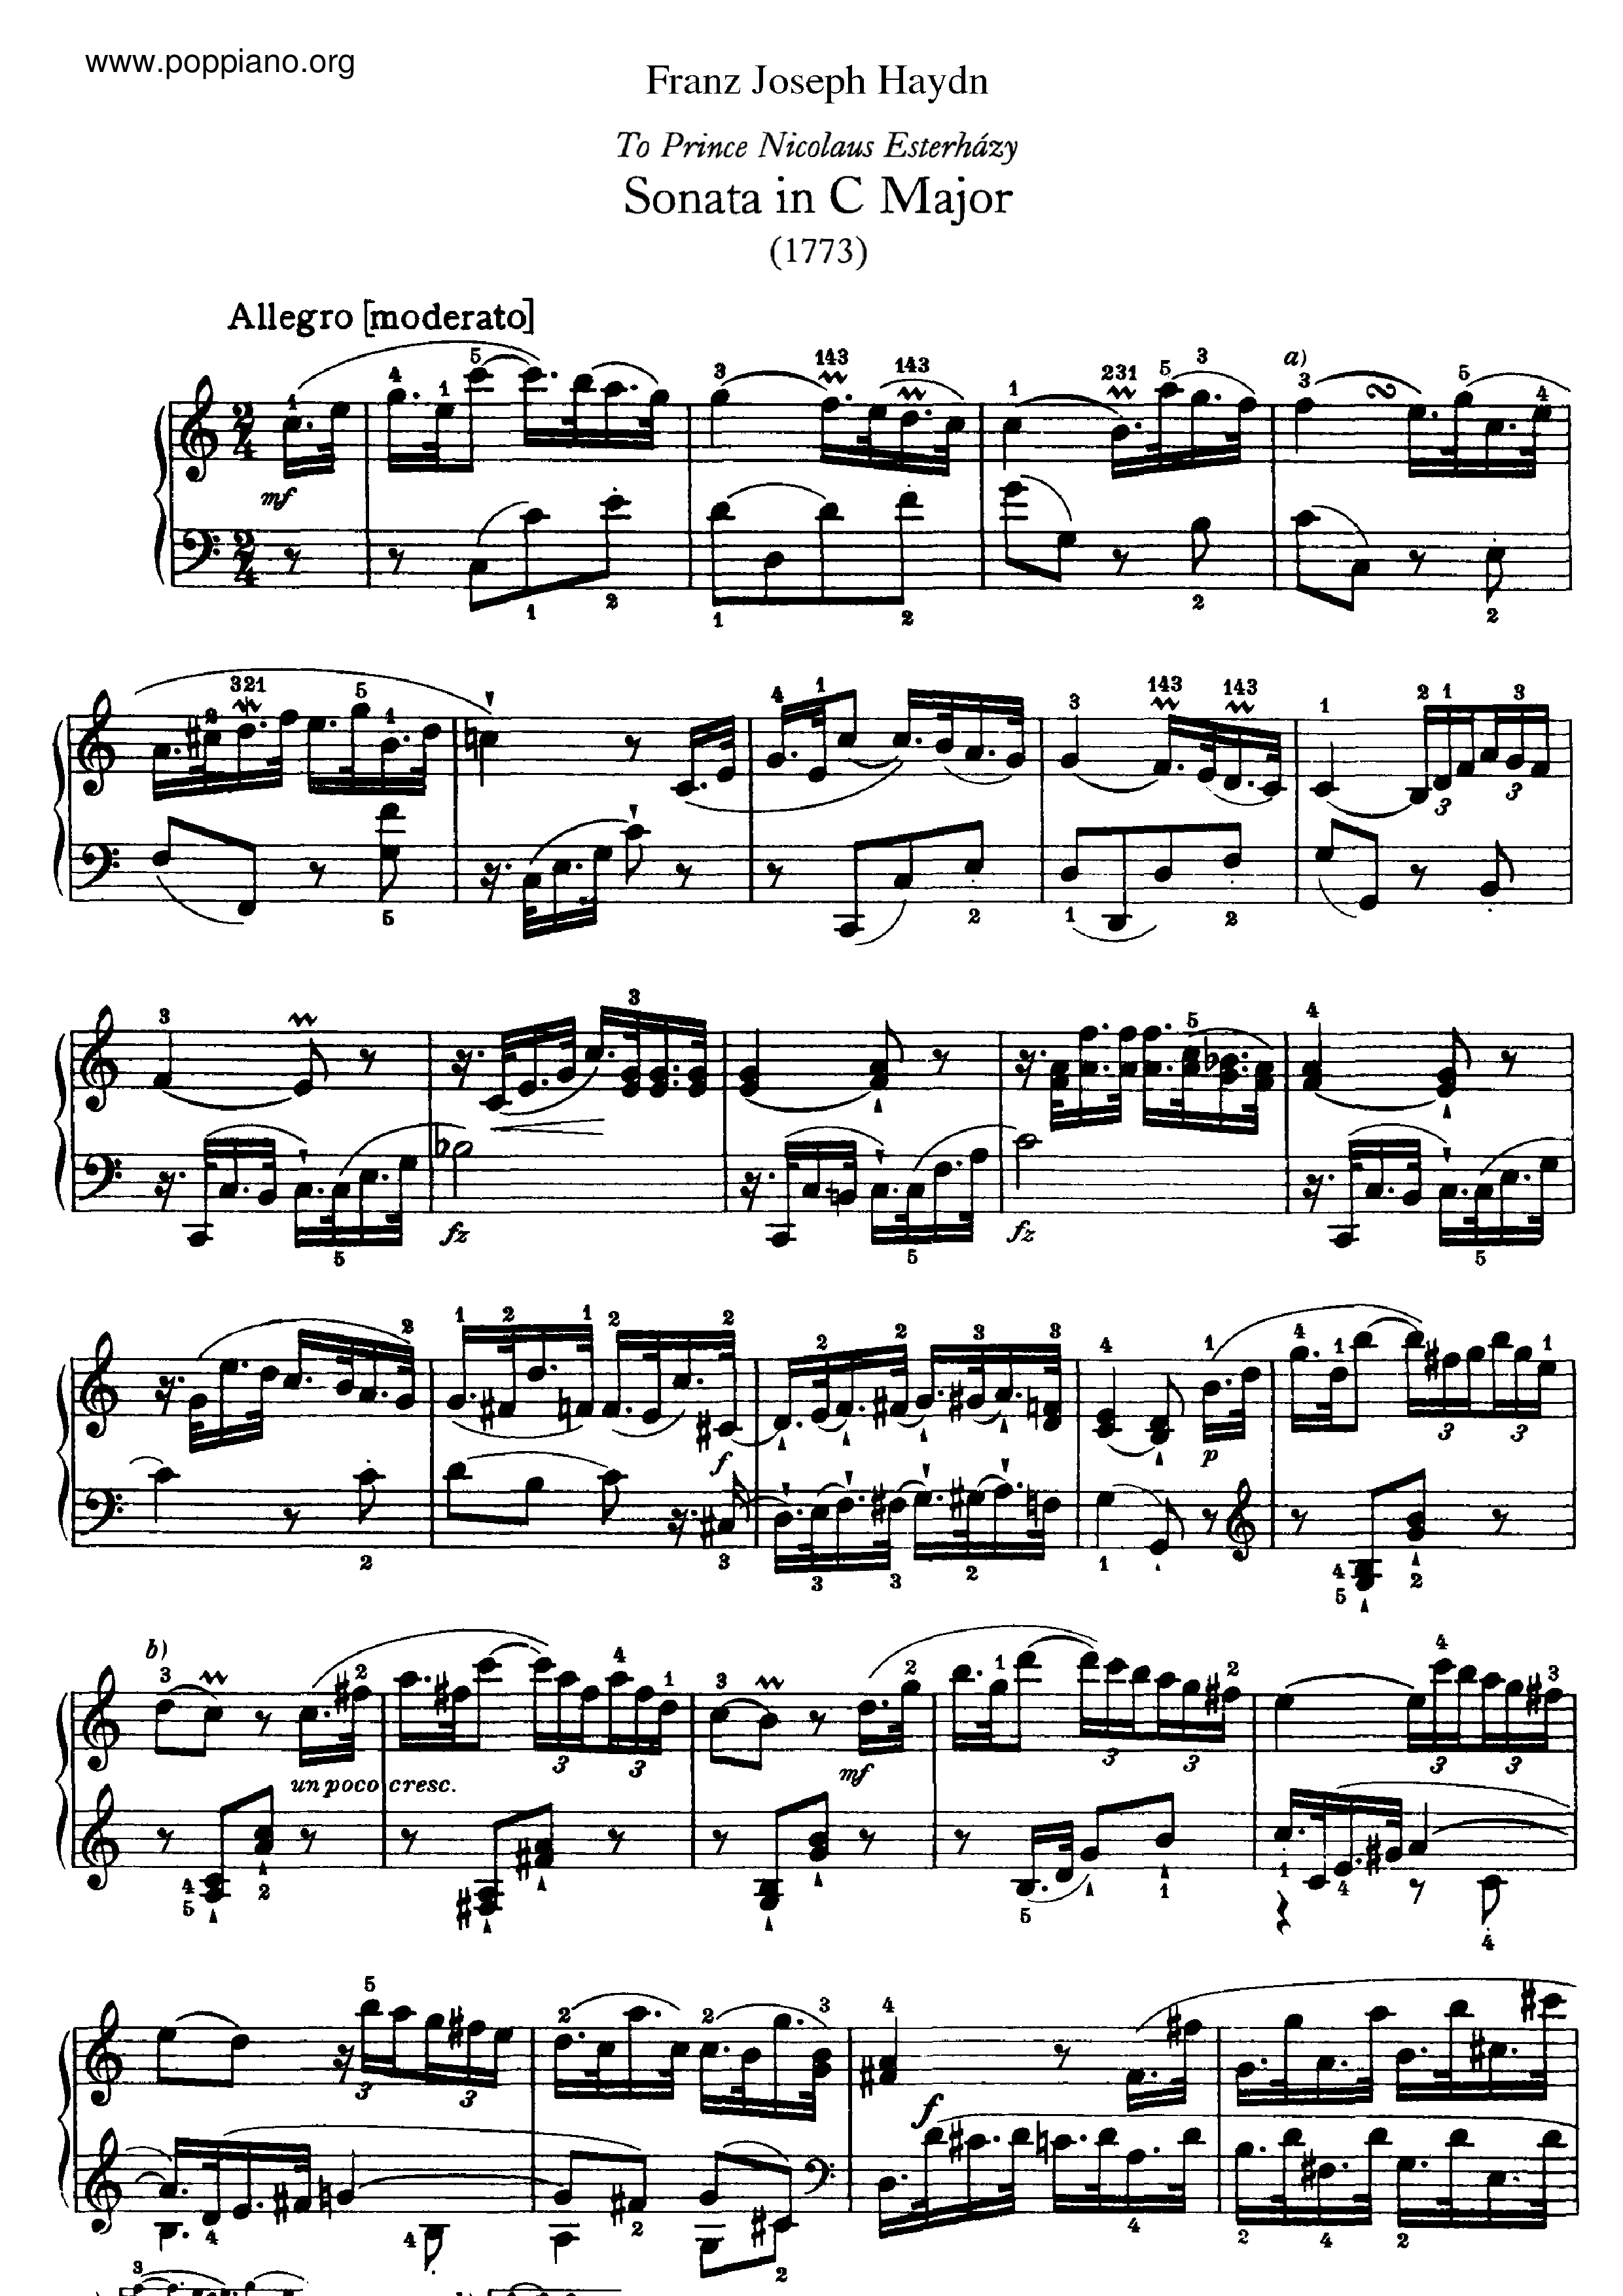 Sonata No.21 in C major琴谱